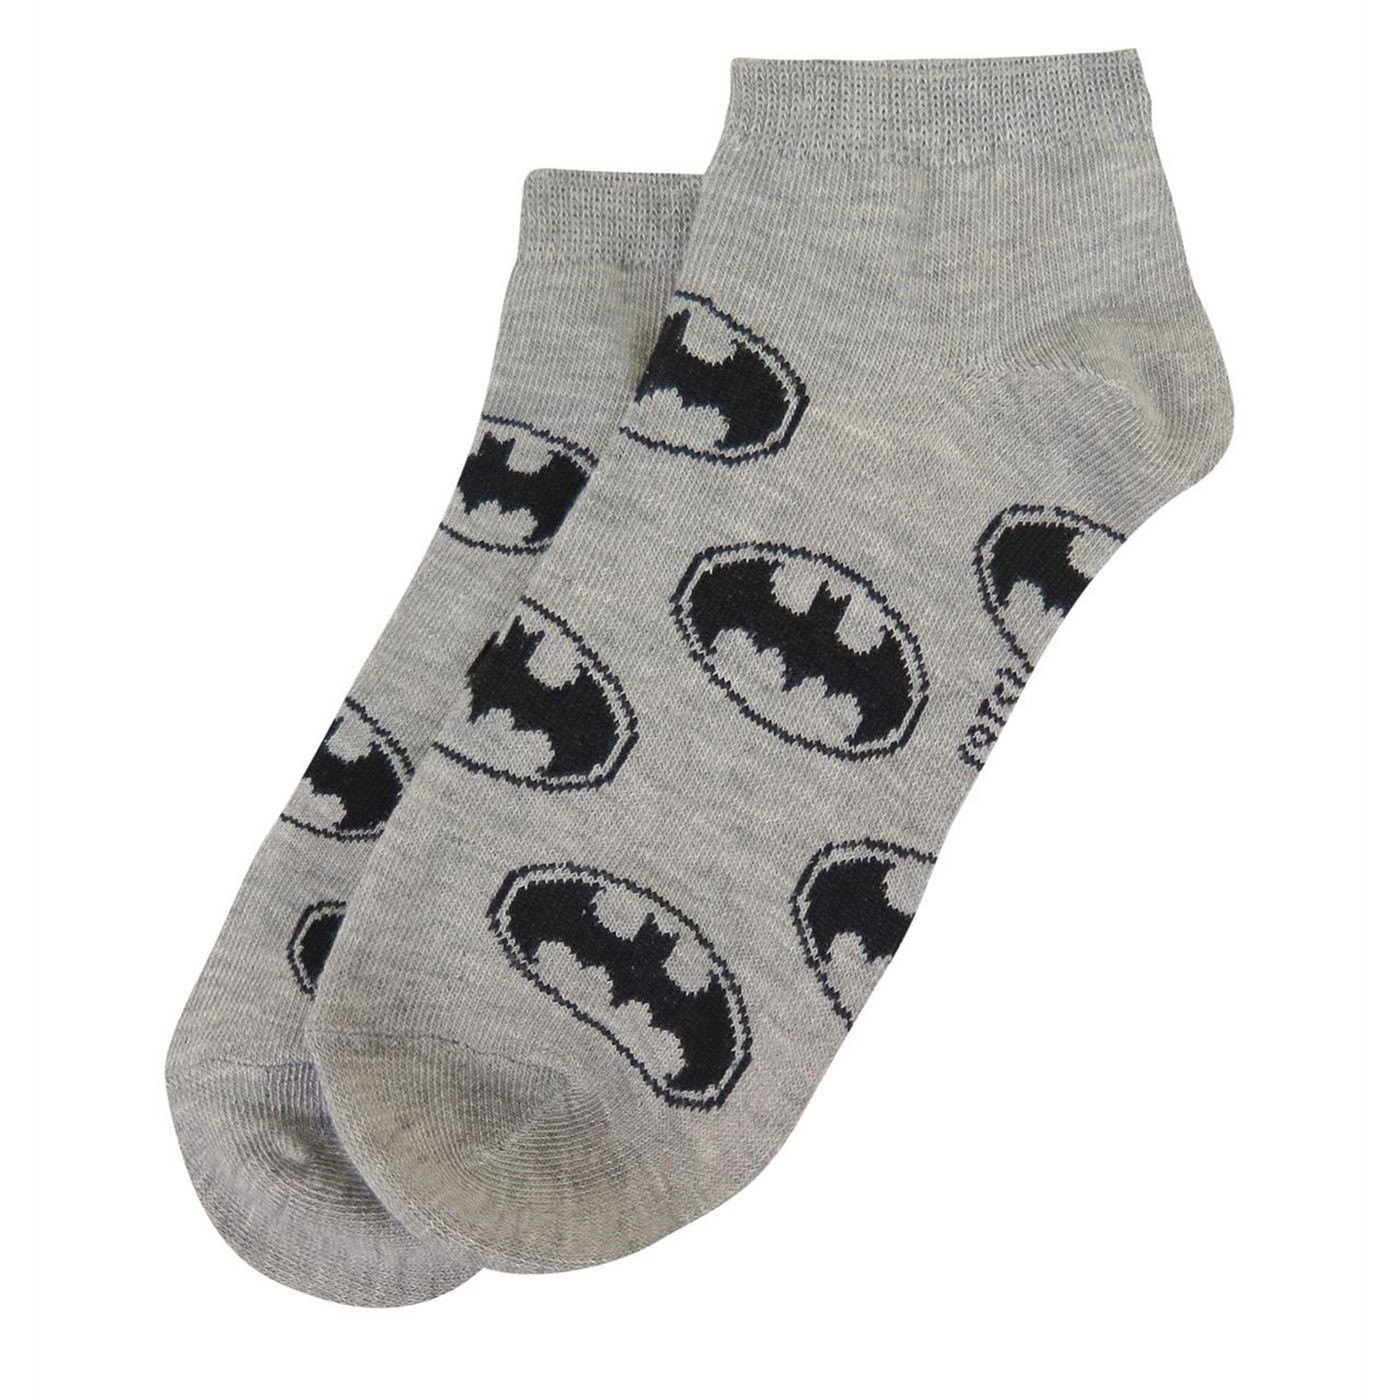 Batman Symbols Kids Sock 5 Pack